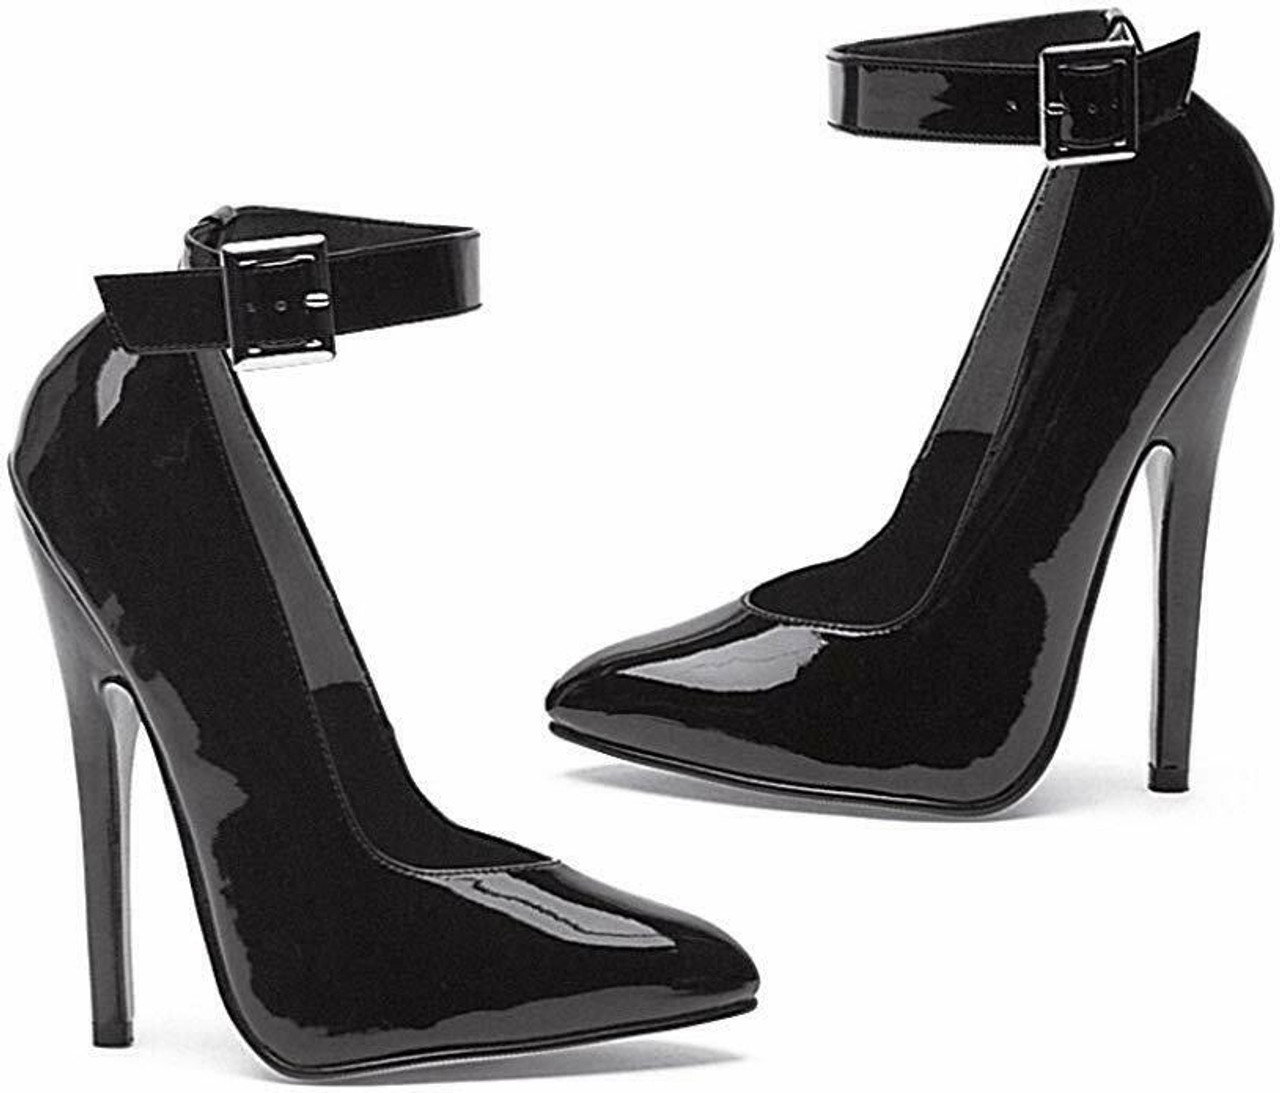 6 inch Heels | Brown leather heels, Black shoes women, Black sandals heels